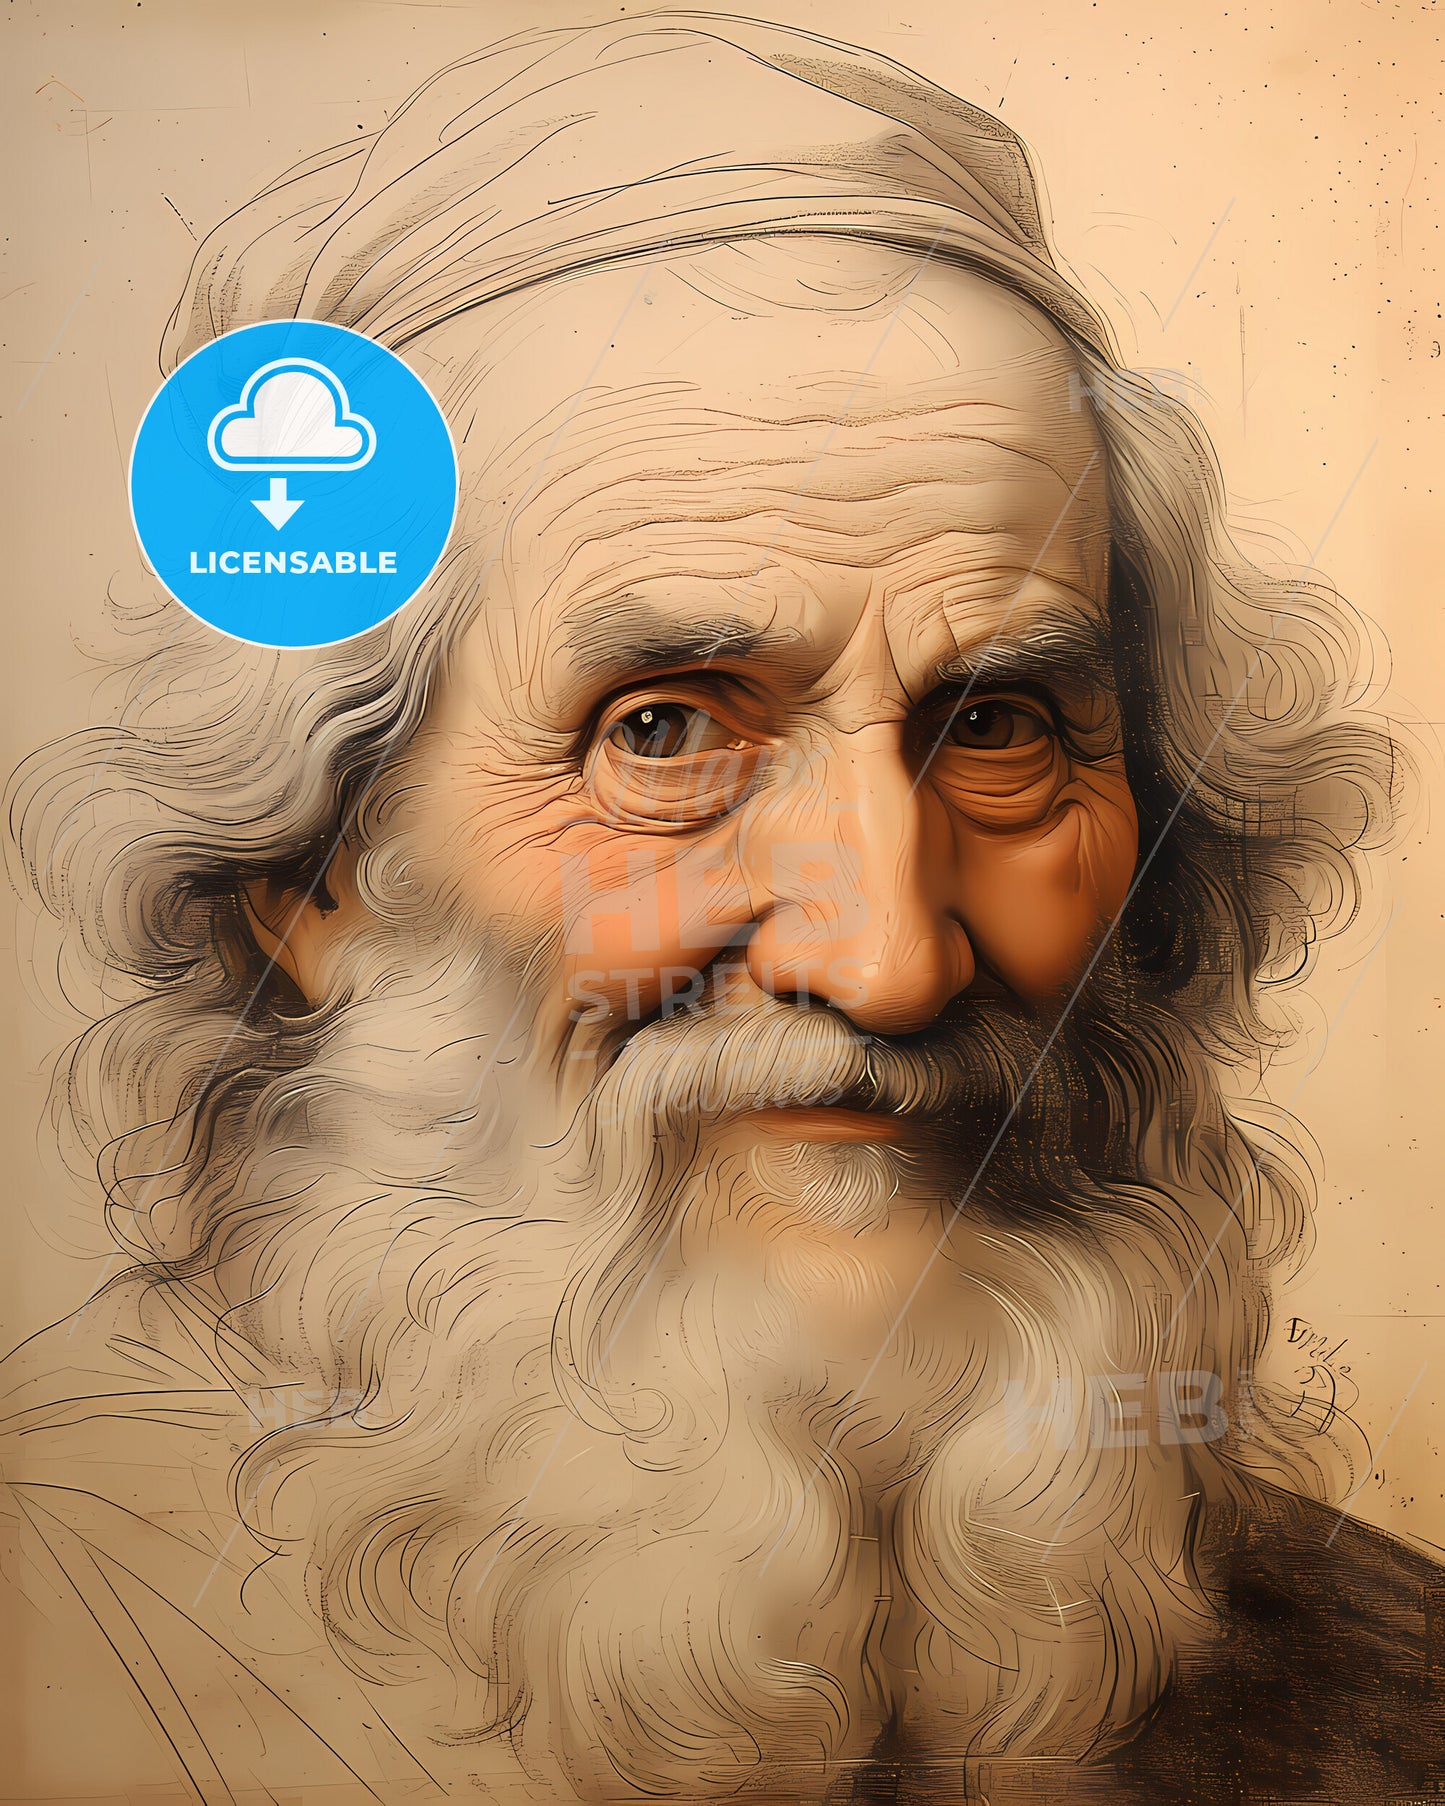 Leonardo, da Vinci, 1452 - 1519, a painting of a man with a beard